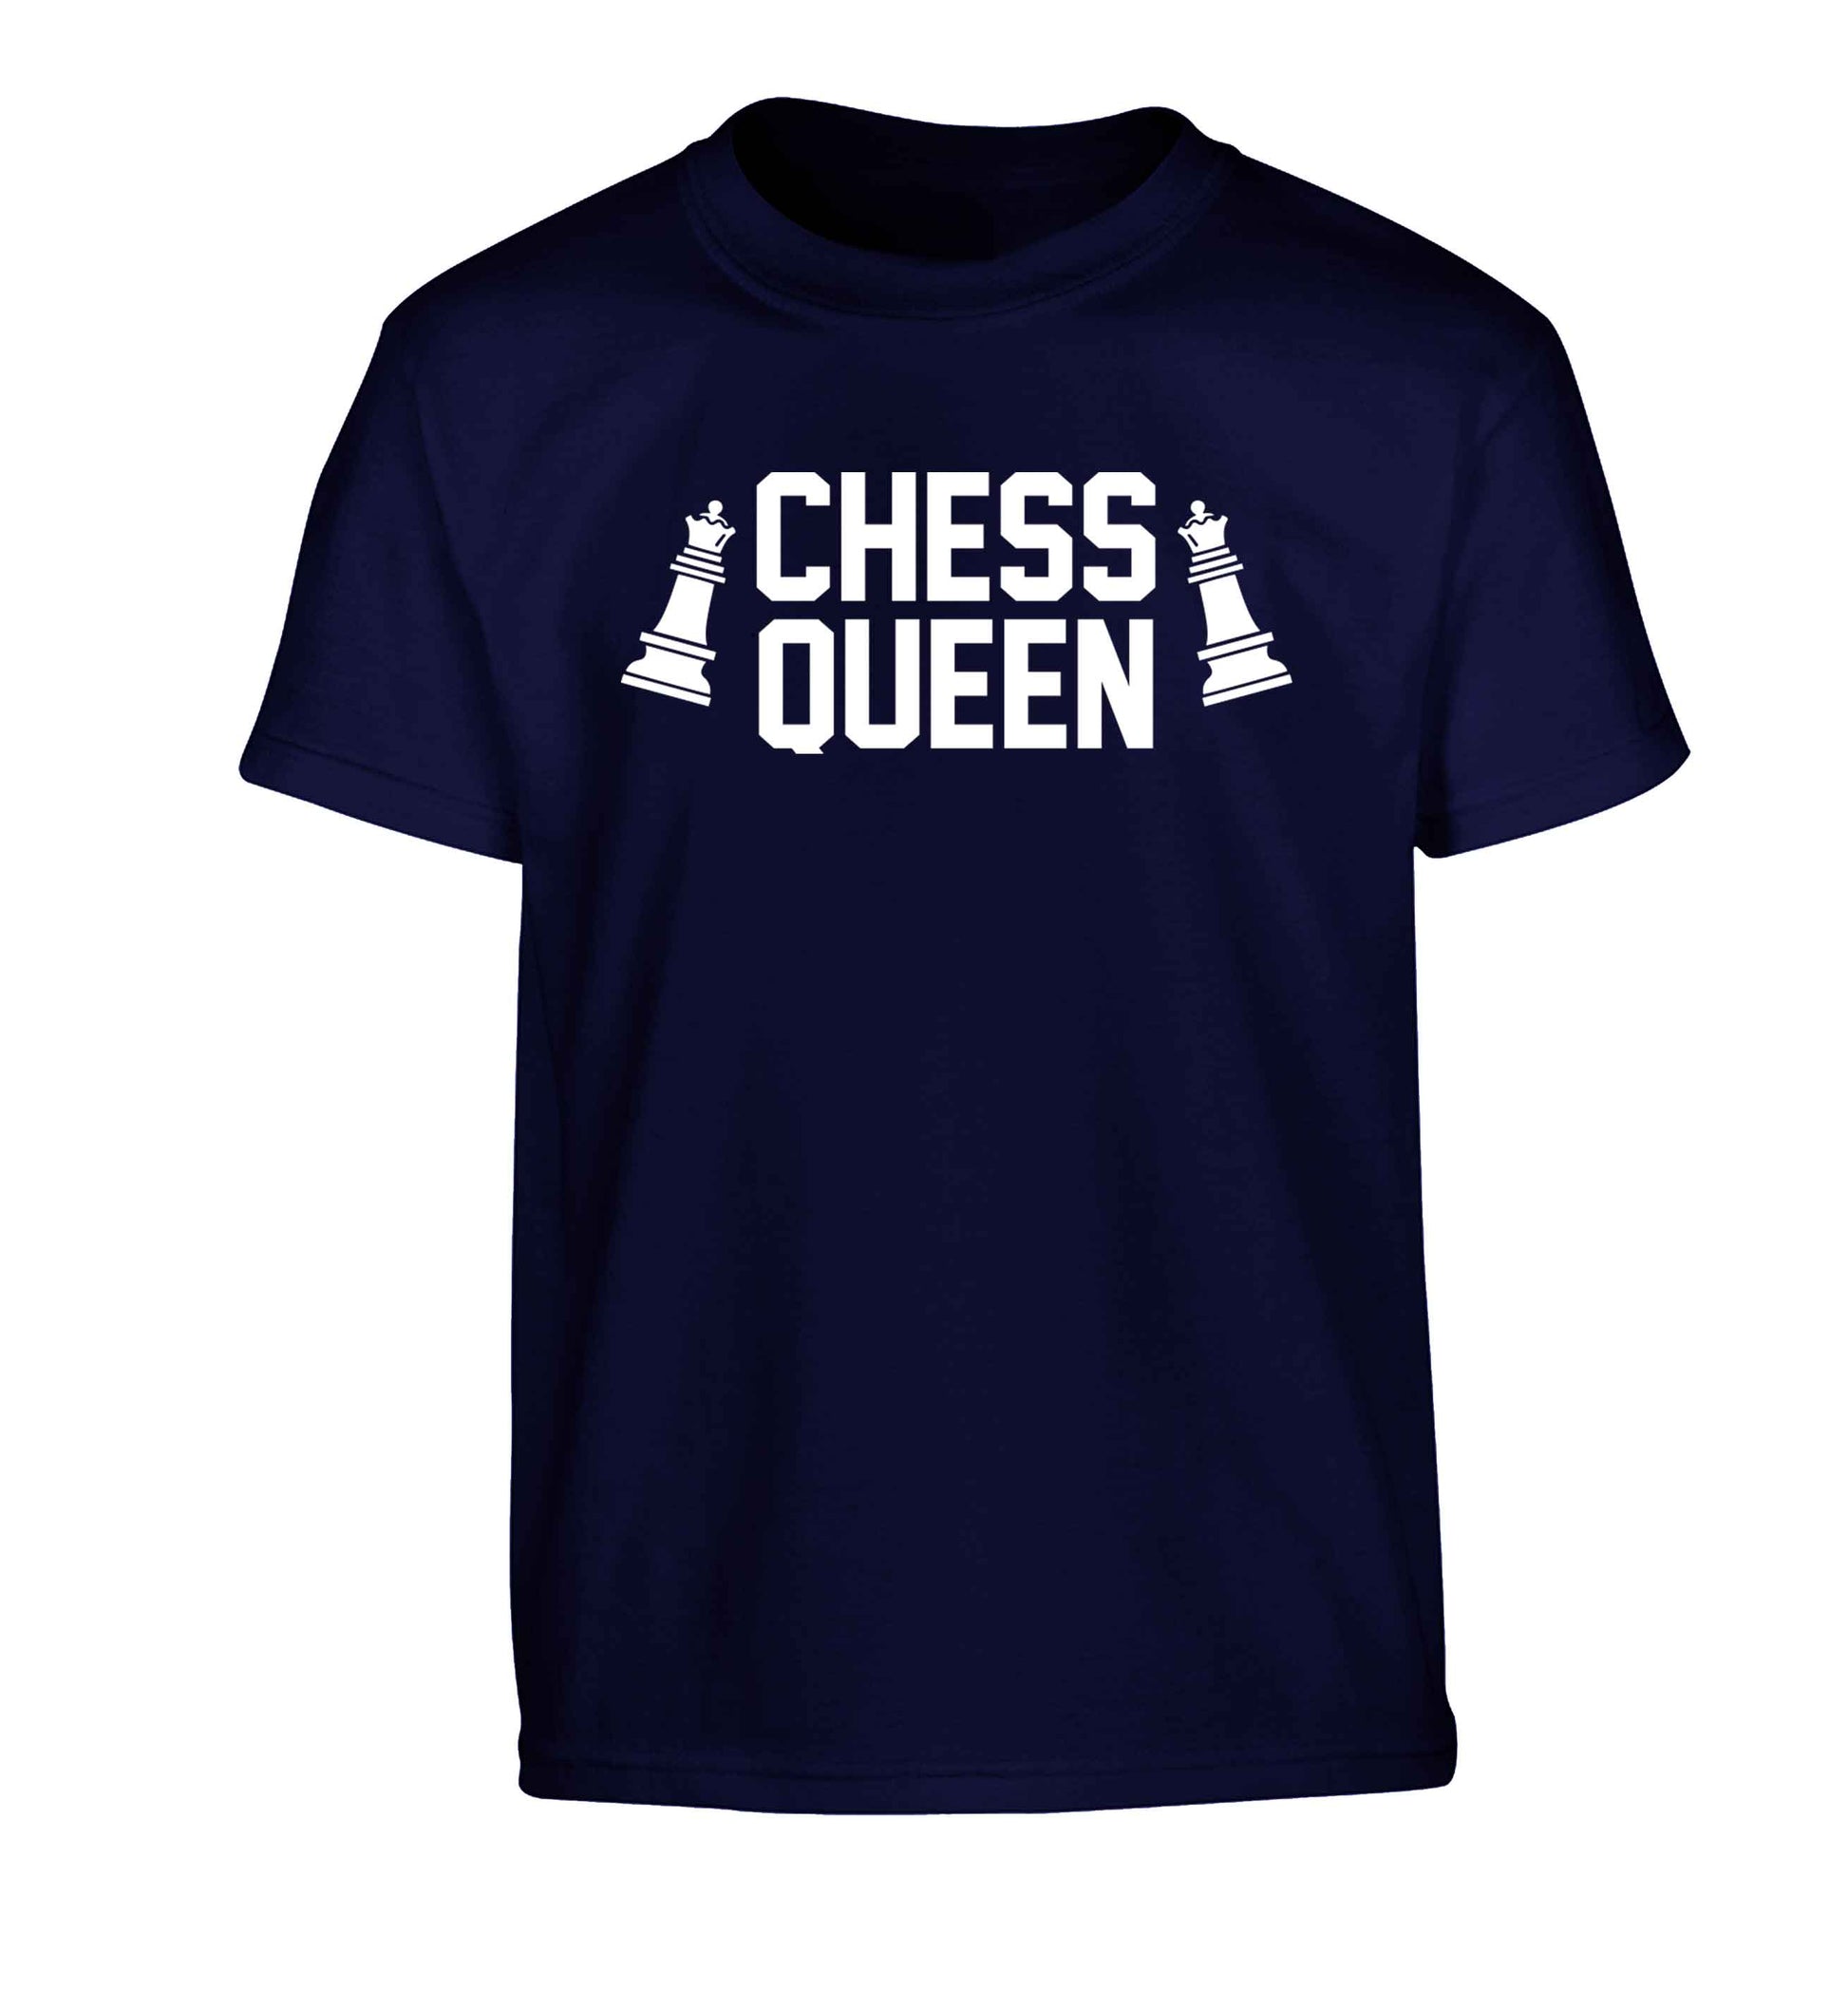 Chess queen Children's navy Tshirt 12-13 Years